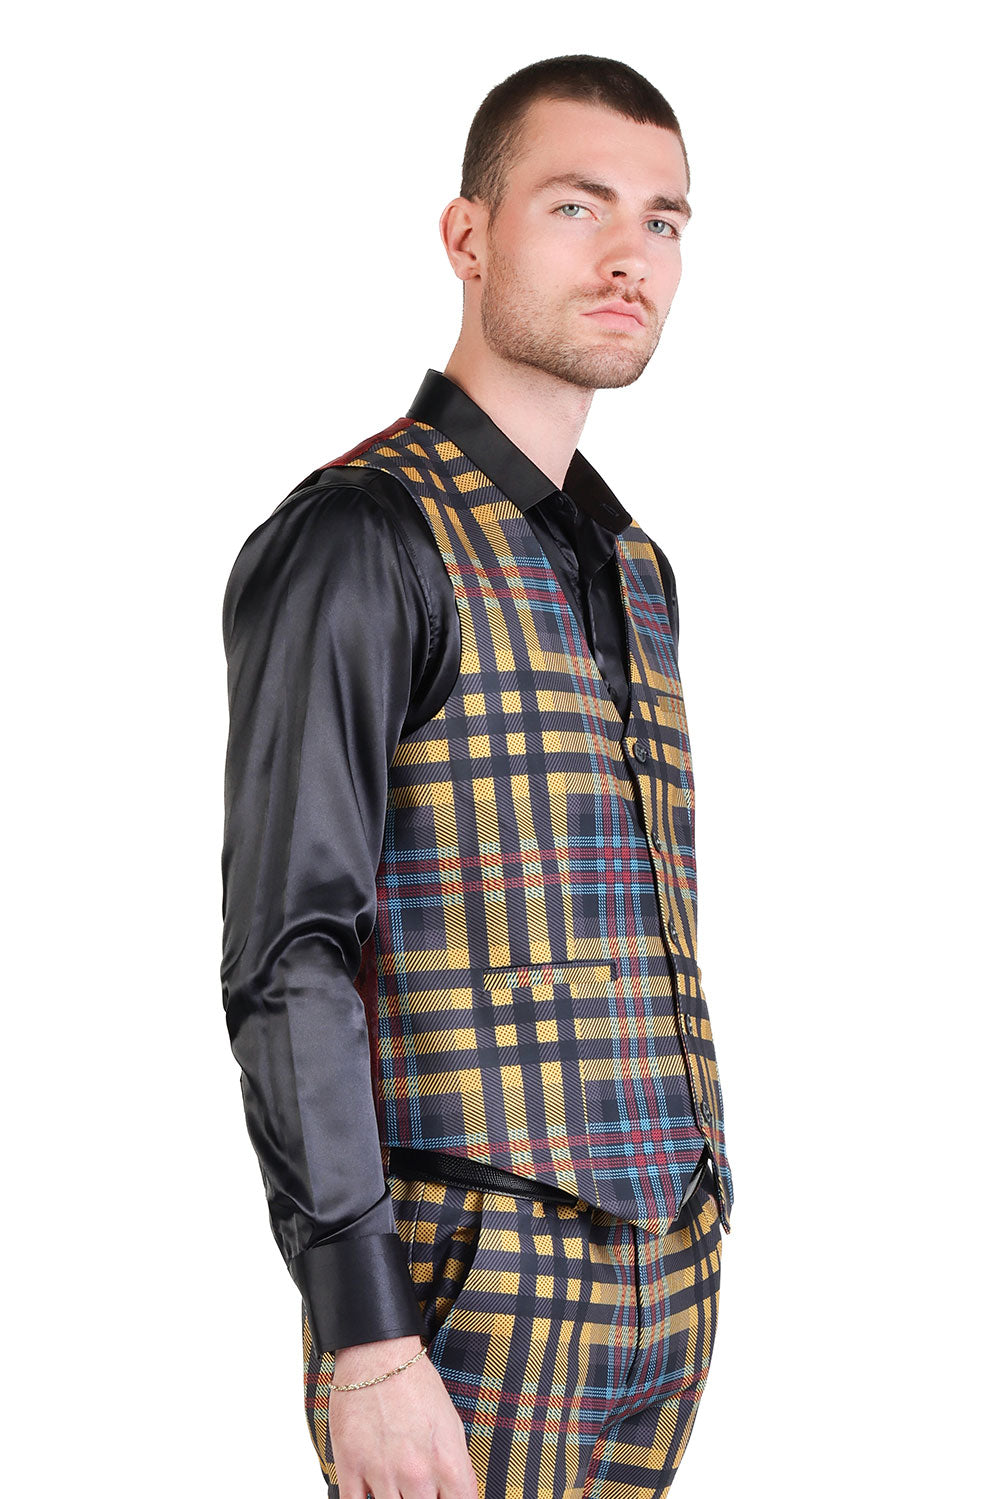 Barabas Men's Luxury Plaid Checkered Dress Slim Fit Vests VP201 Saffron